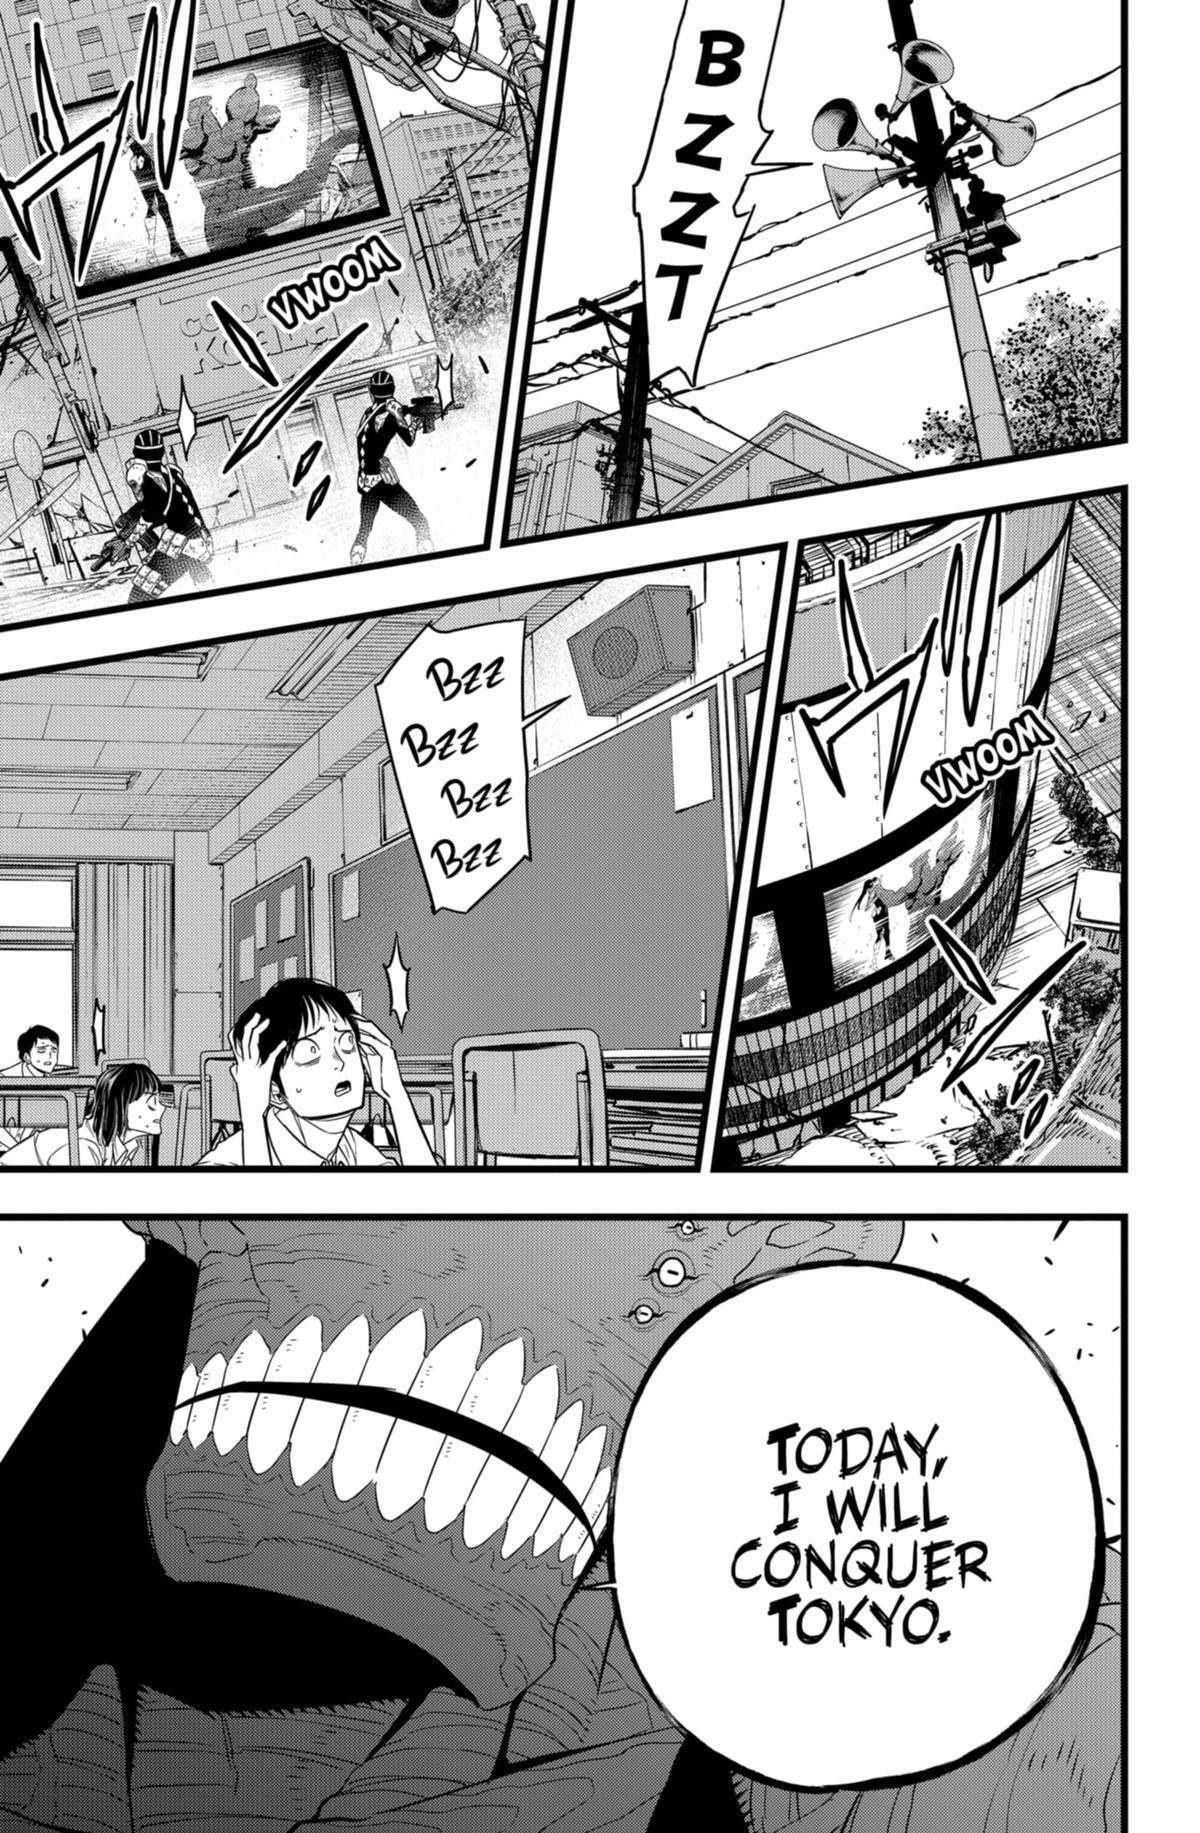 Kaiju No. 8 Chapter 98 page 19 - Mangakakalot